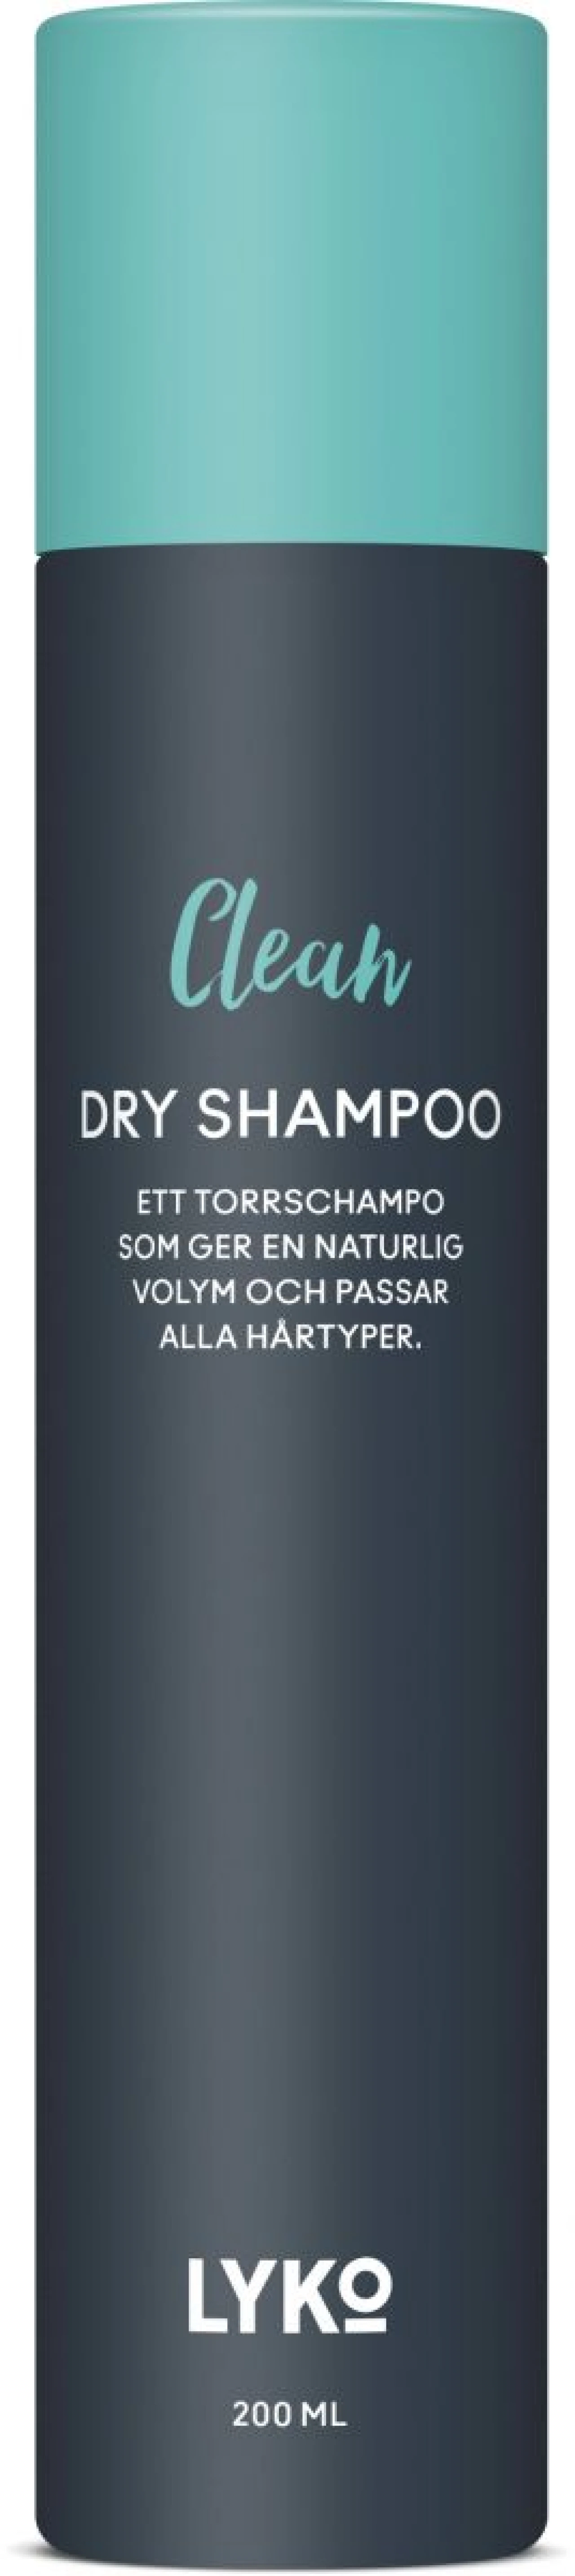 Lyko Dry Shampoo Clean